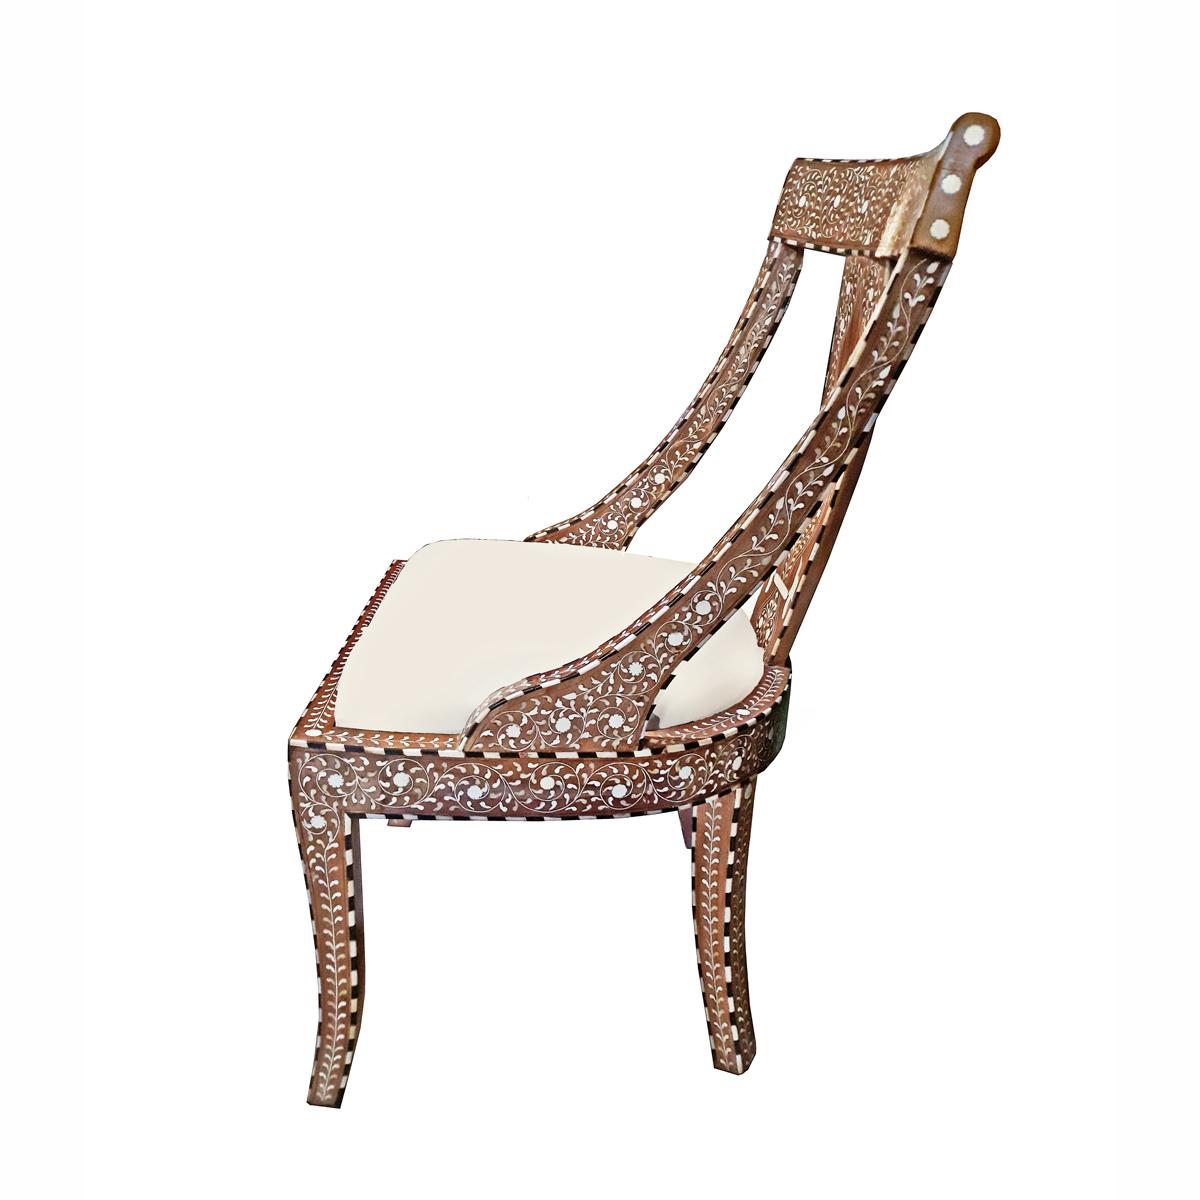 Contemporary Bone-Inlaid Armless Chair with Cushion